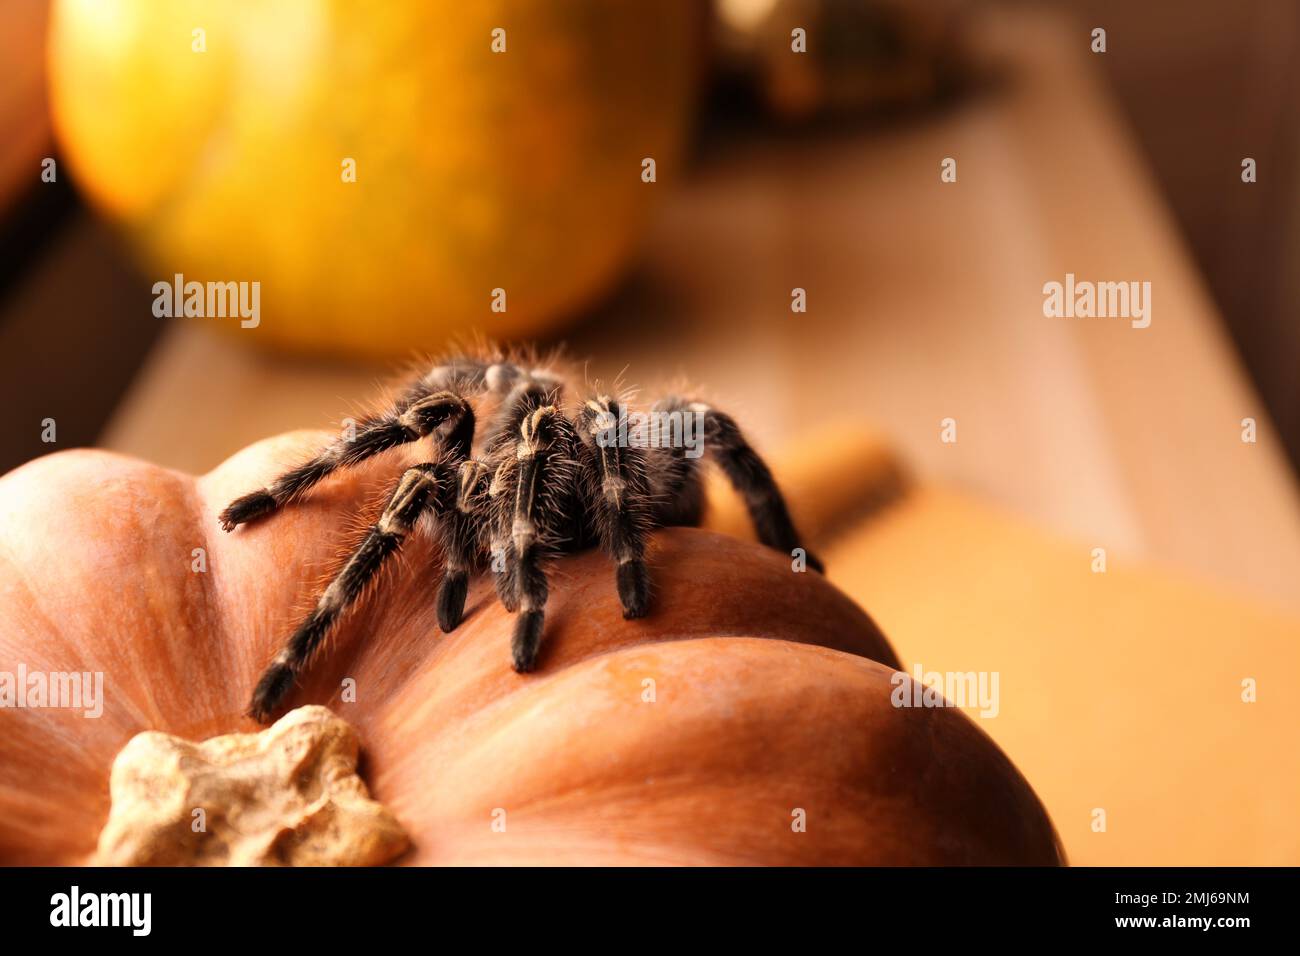 Striped knee tarantula on pumpkin indoors, closeup. Halloween celebration Stock Photo